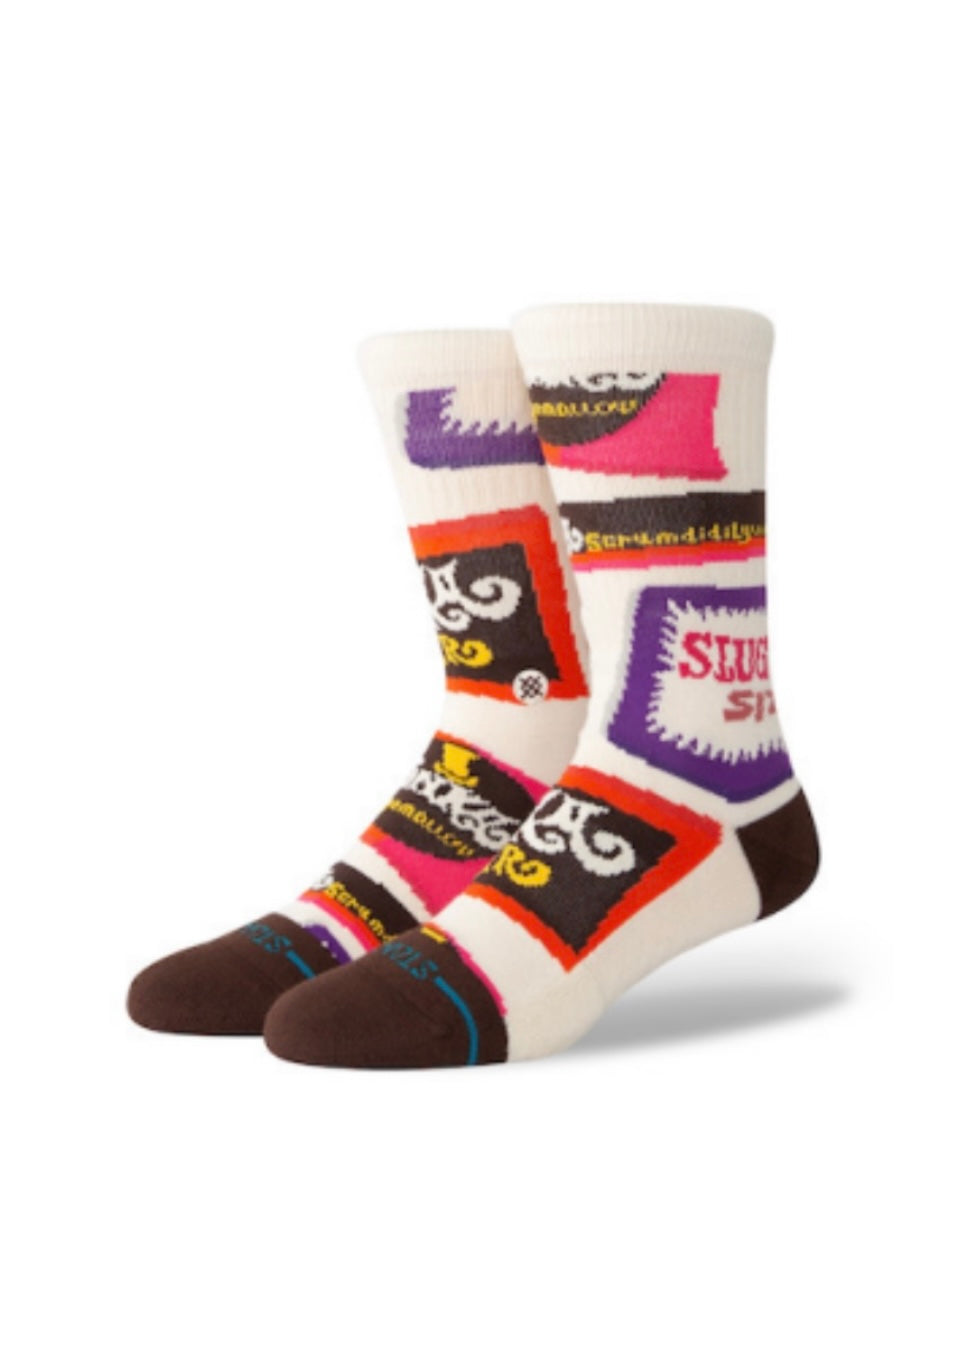 Socks Wonka Bars